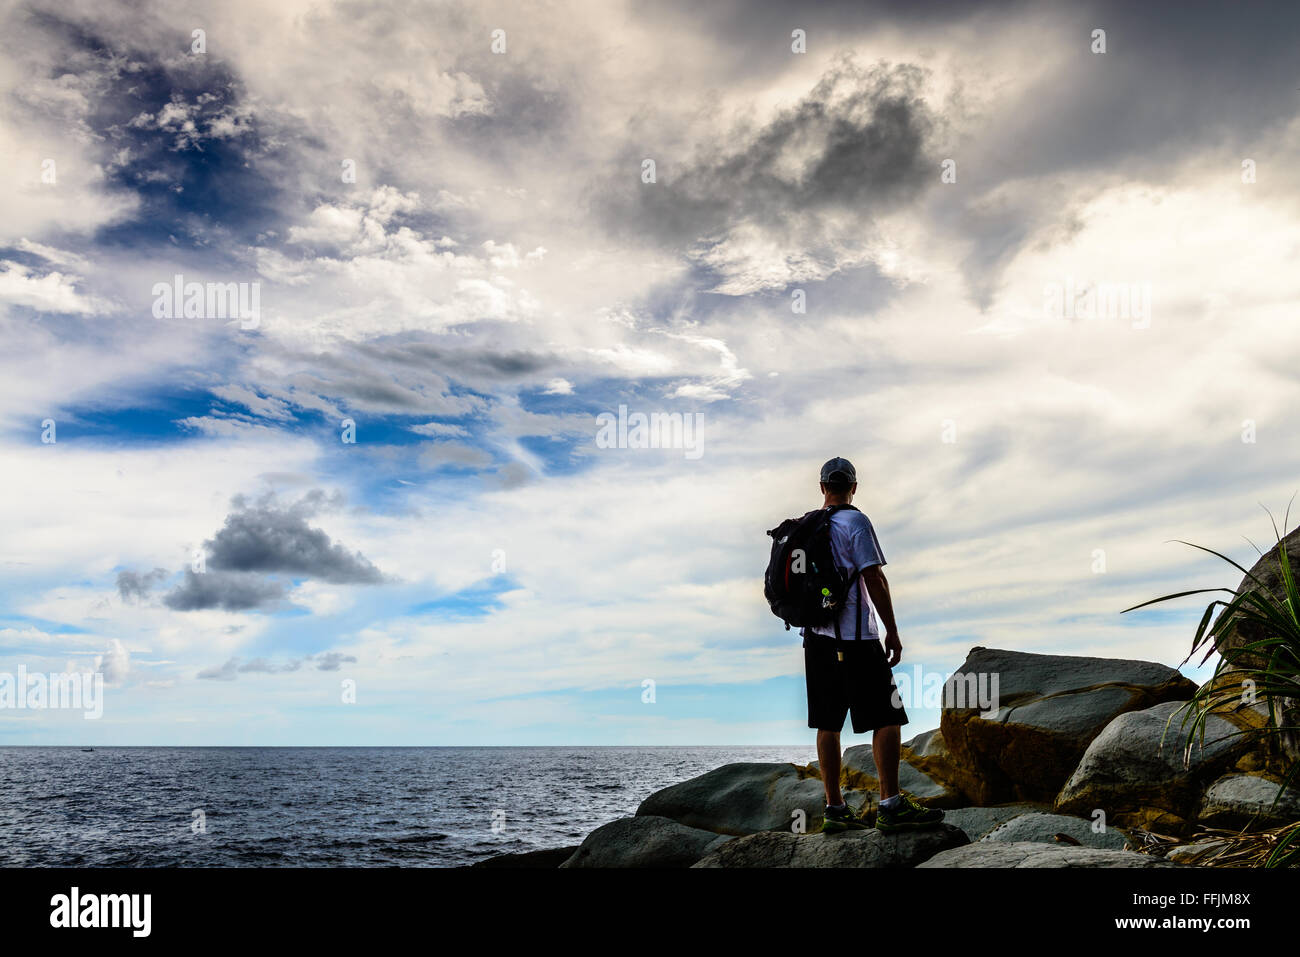 A man  gazing into a beautiful evening sky off the coast of Pulau Manukan island in Malaysia. Stock Photo